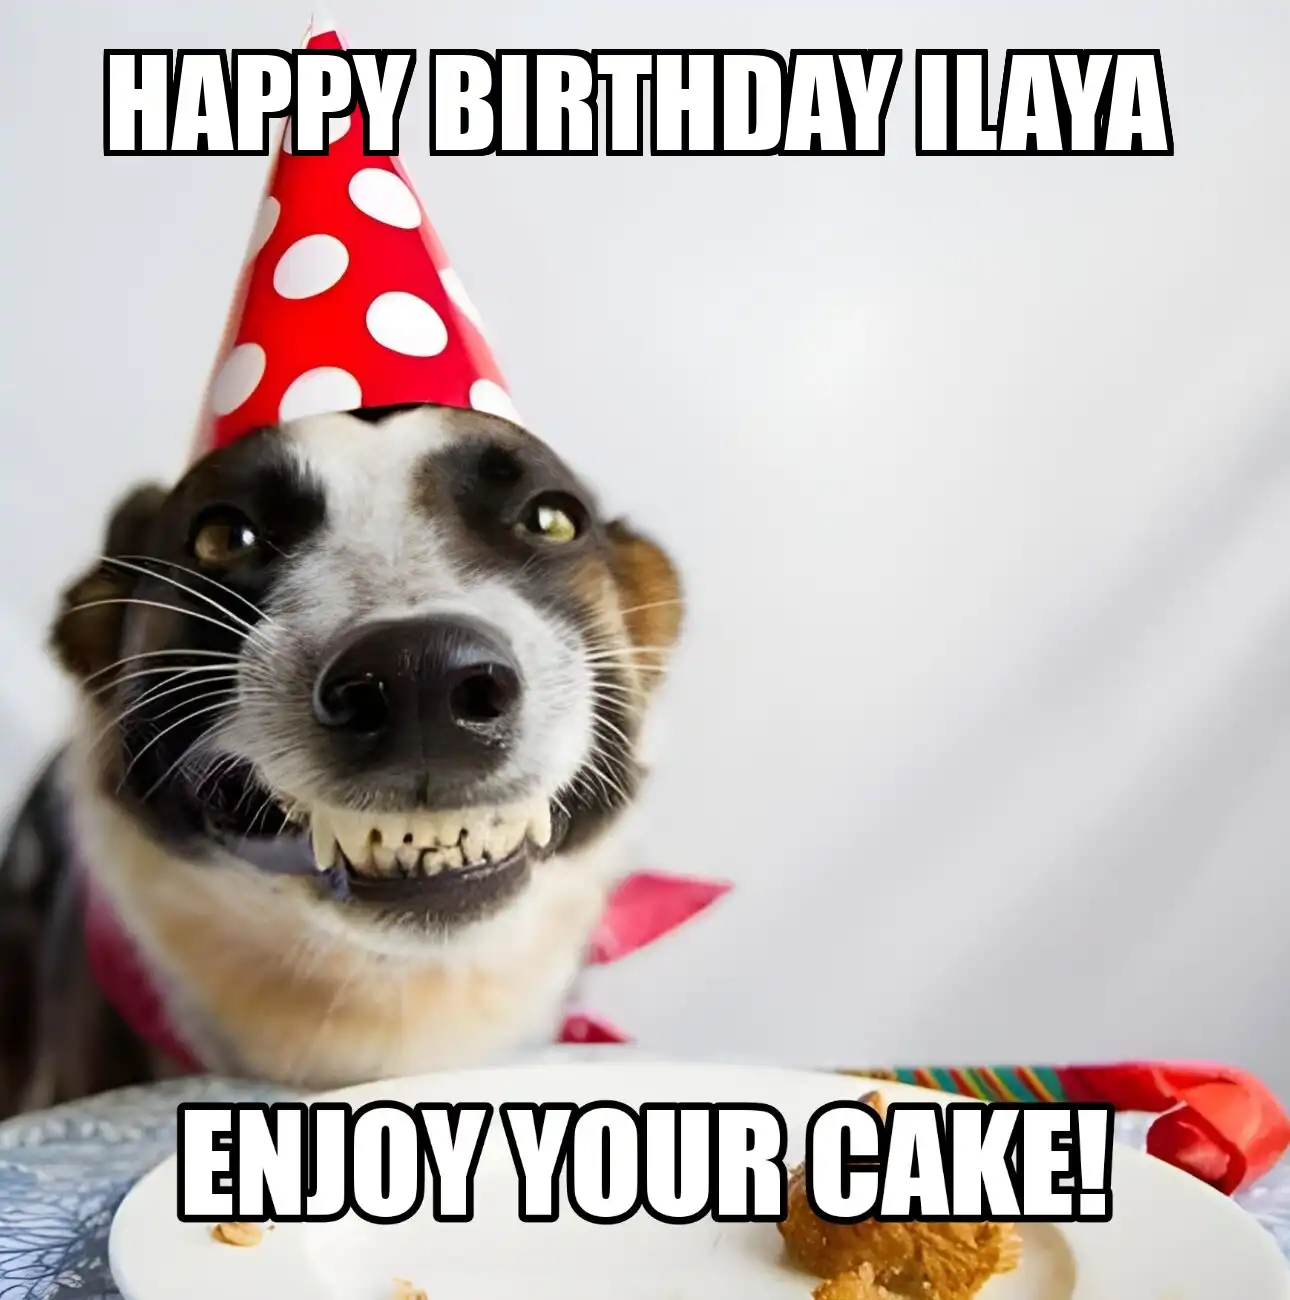 Happy Birthday Ilaya Enjoy Your Cake Dog Meme